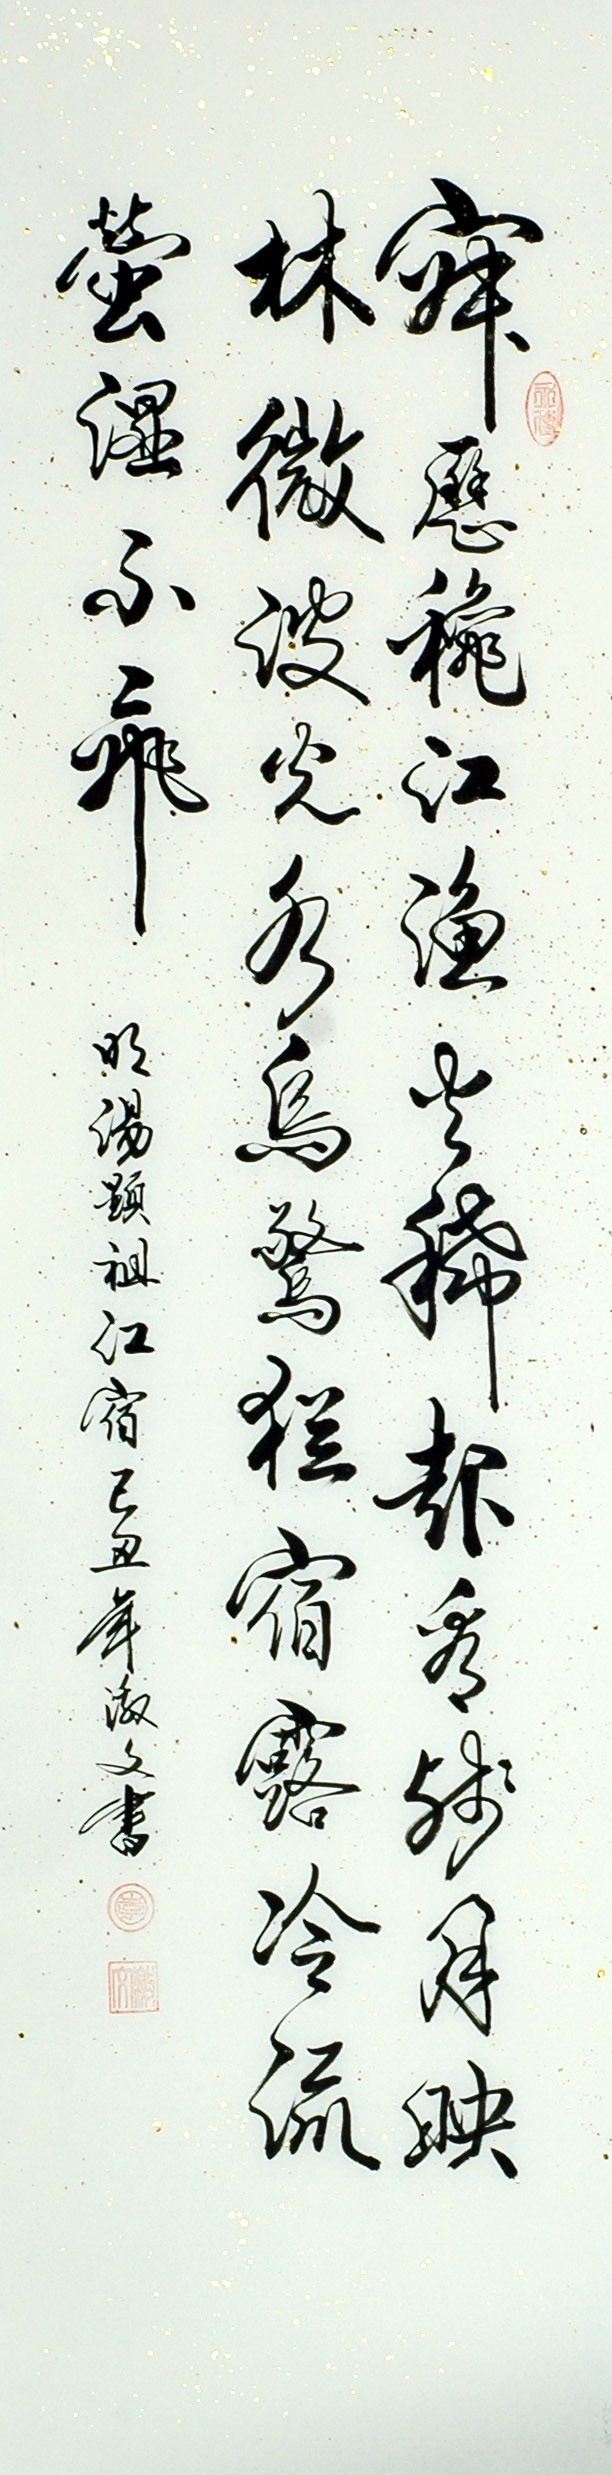 Chinese Cursive Scripts Painting - CNAG011042